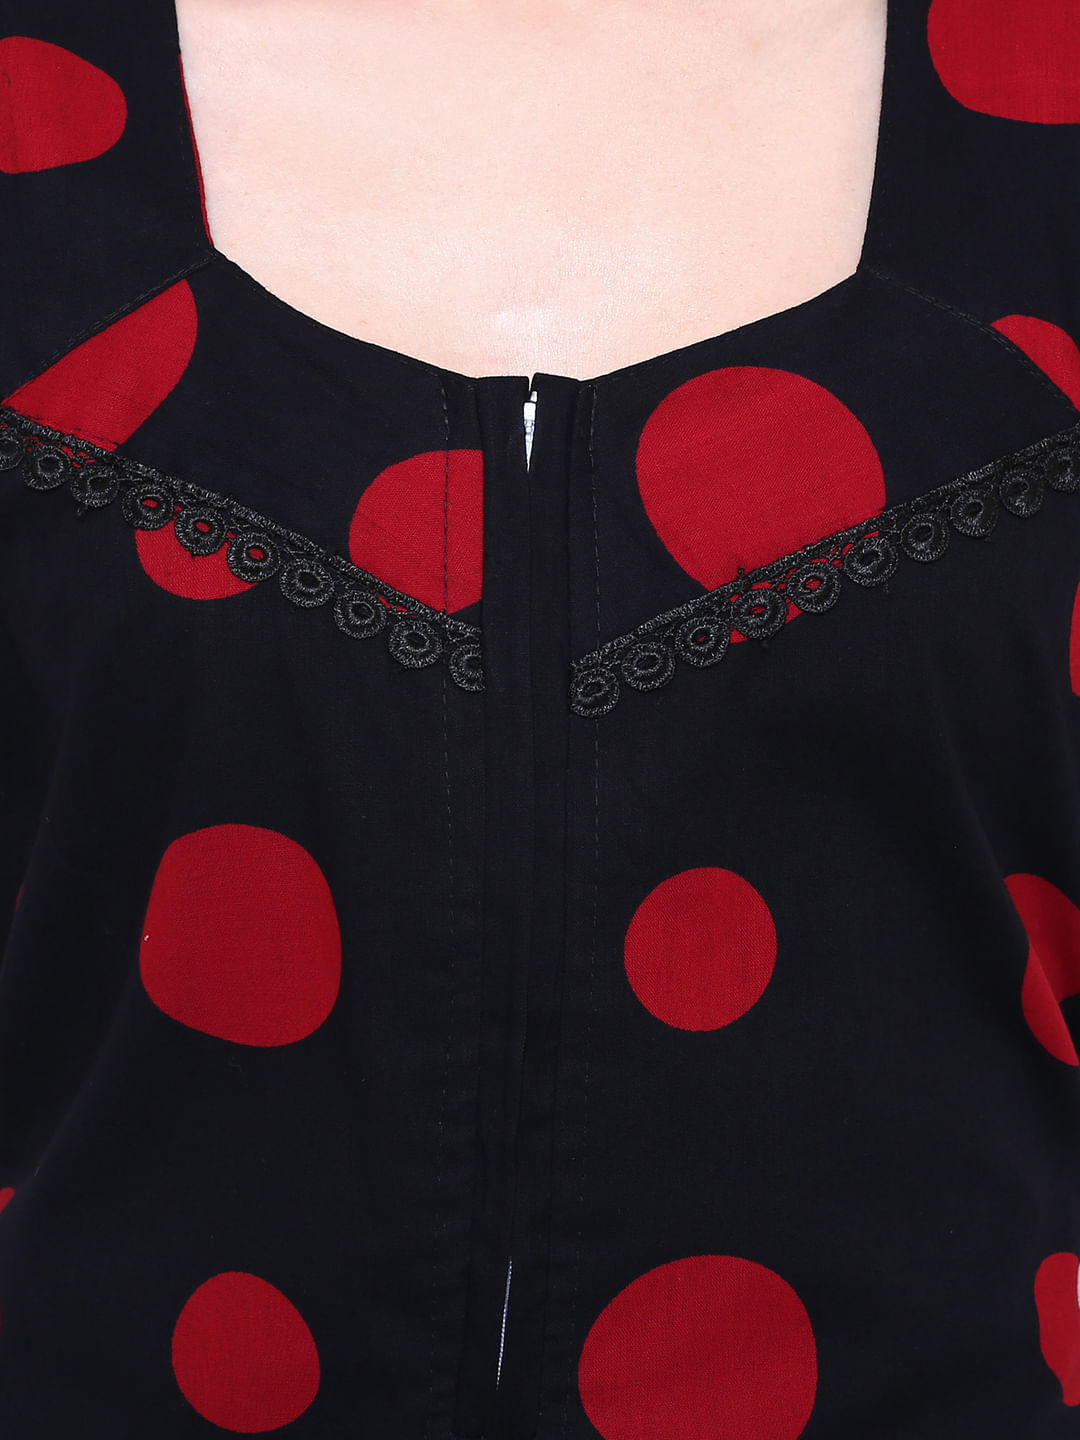 Black-Red Cotton Printed Nightdress